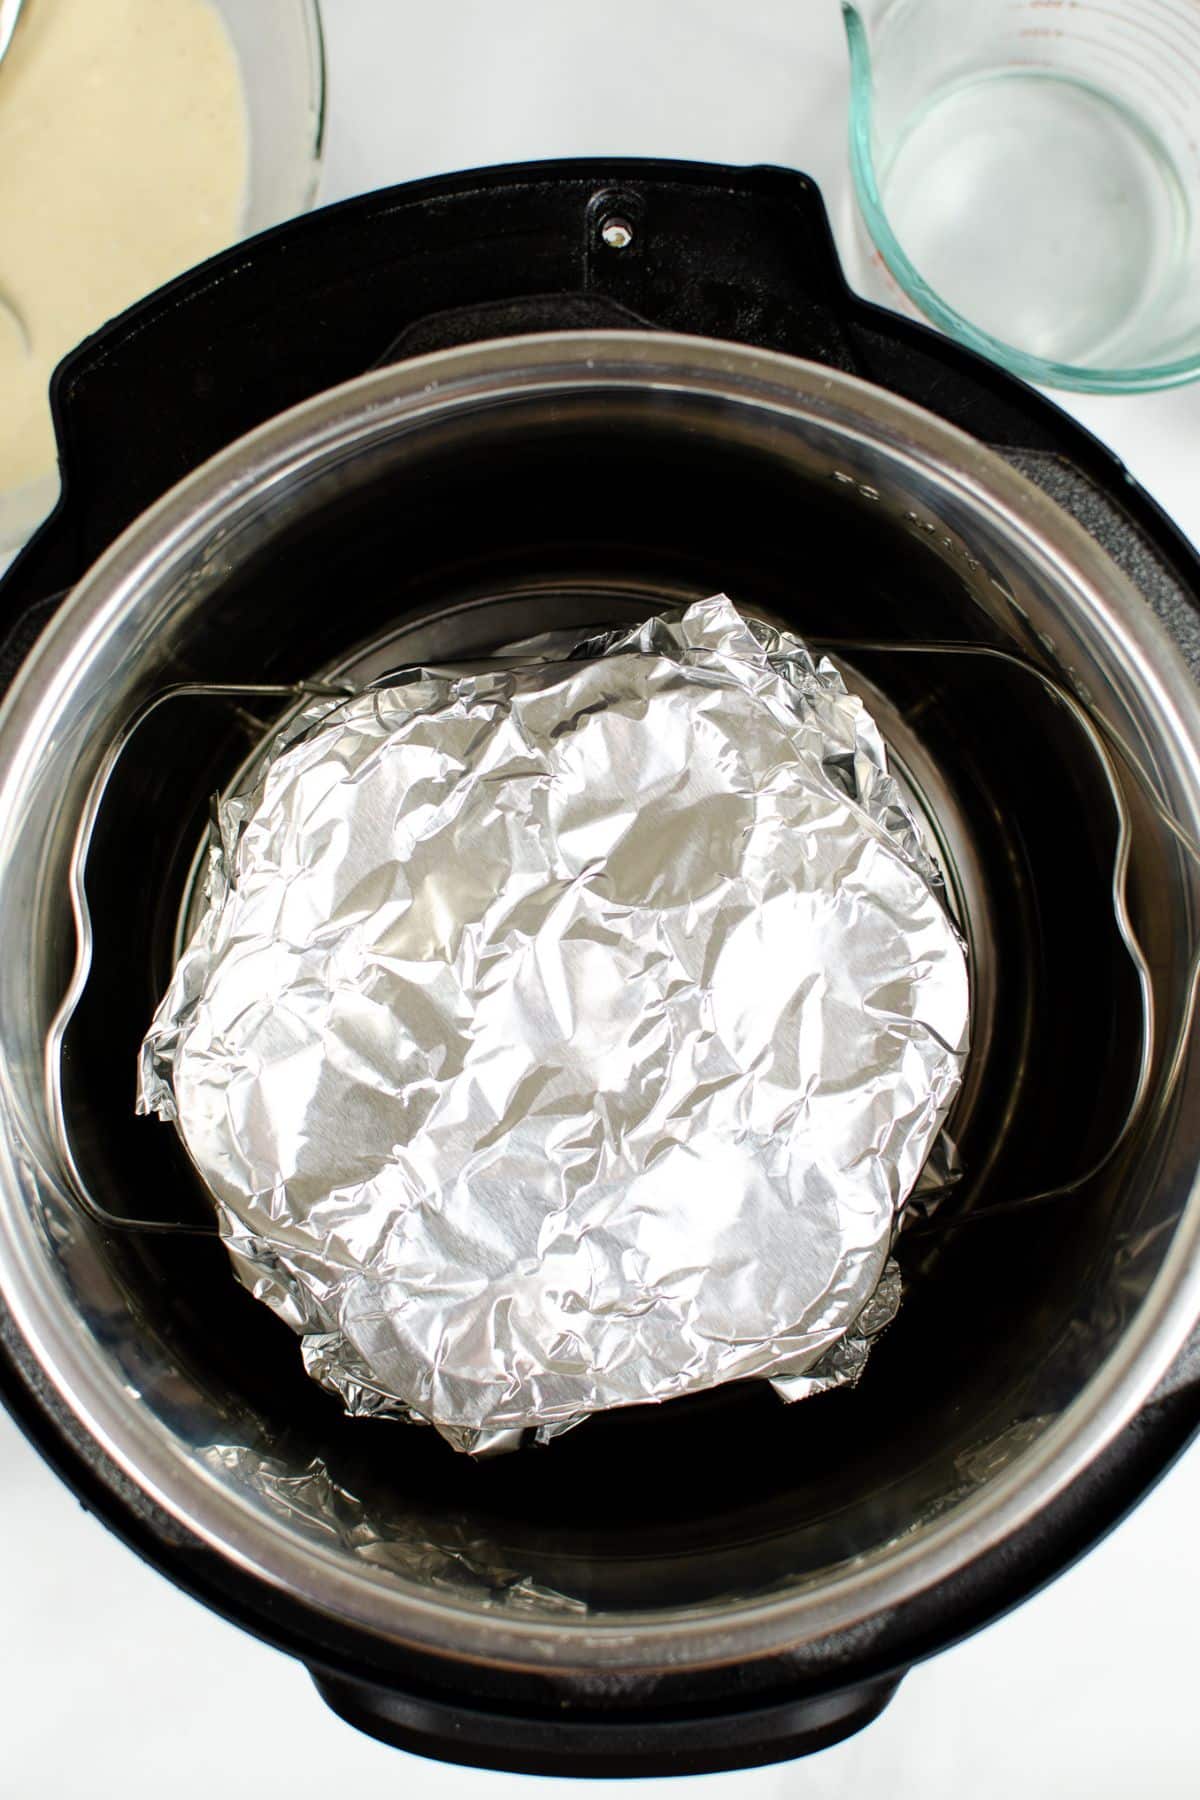 foil covered egg bite molds in a pressure cooker